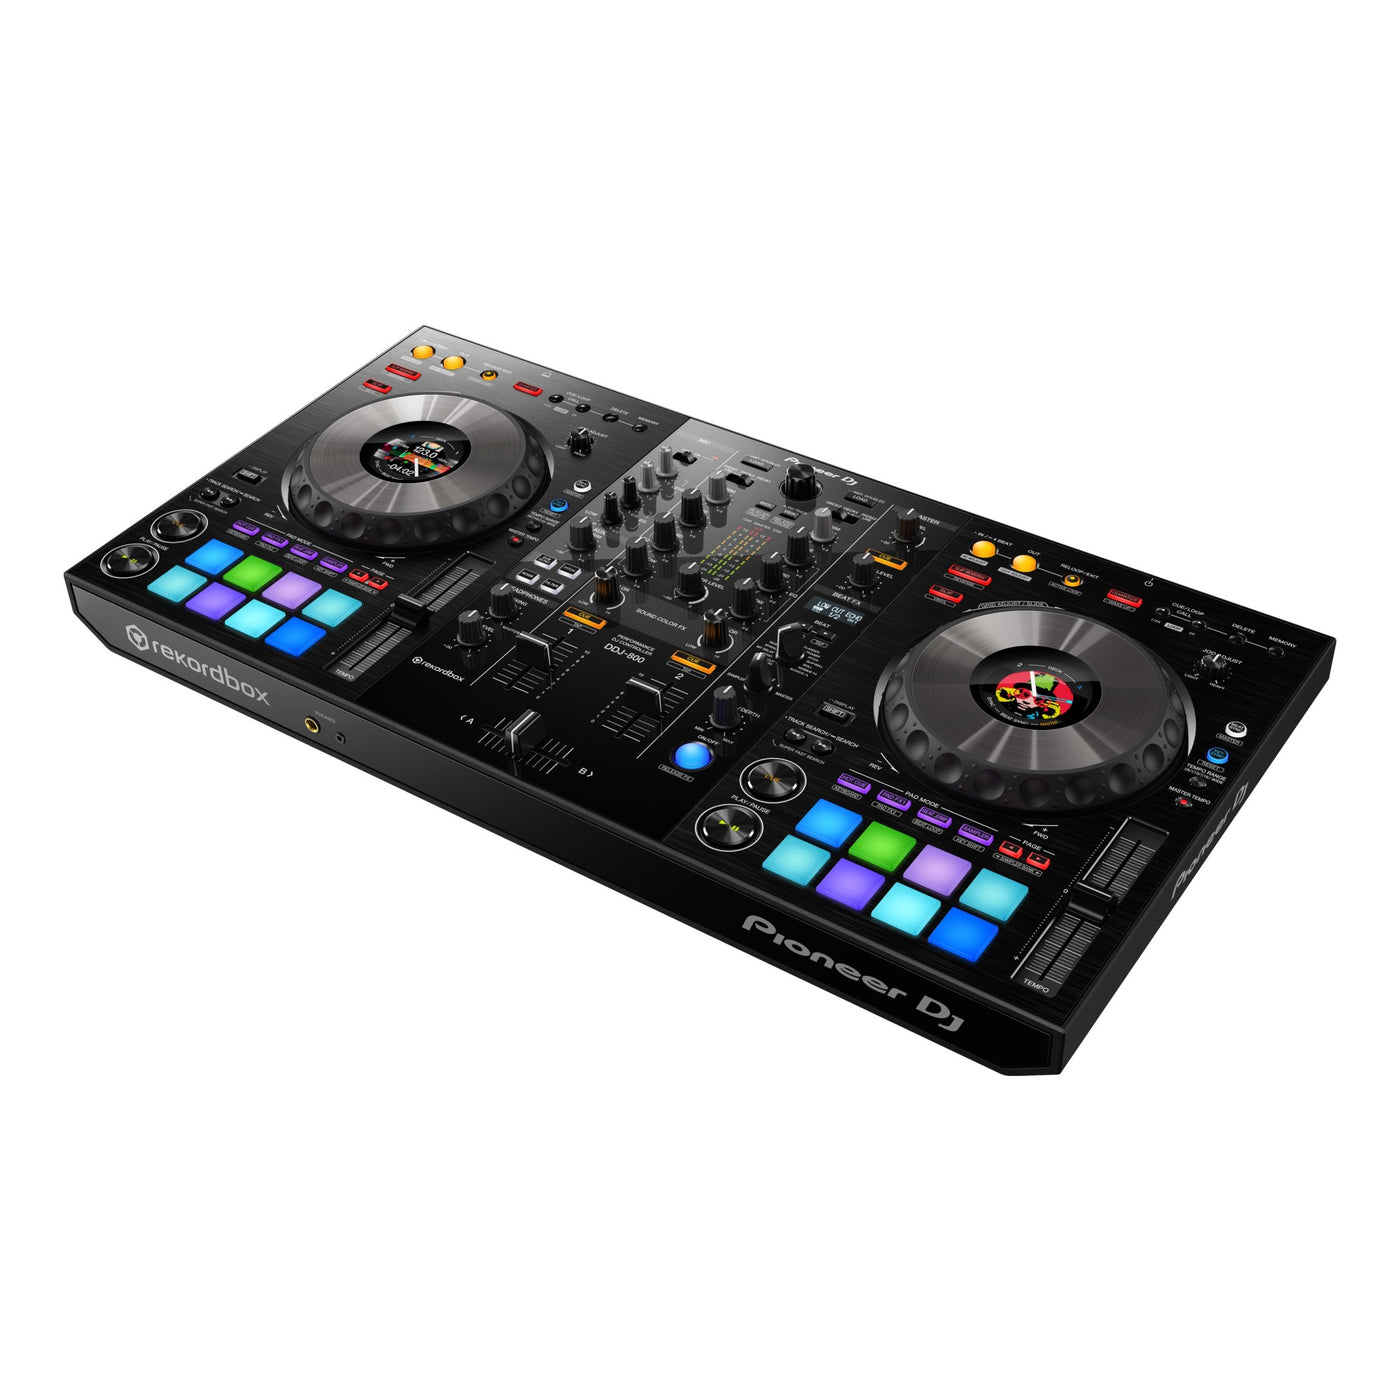 Pioneer DJ DDJ-800 2-Channel Performance DJ Controller for Rekordbox, Professional DJ Equipment Mixer Audio Interface